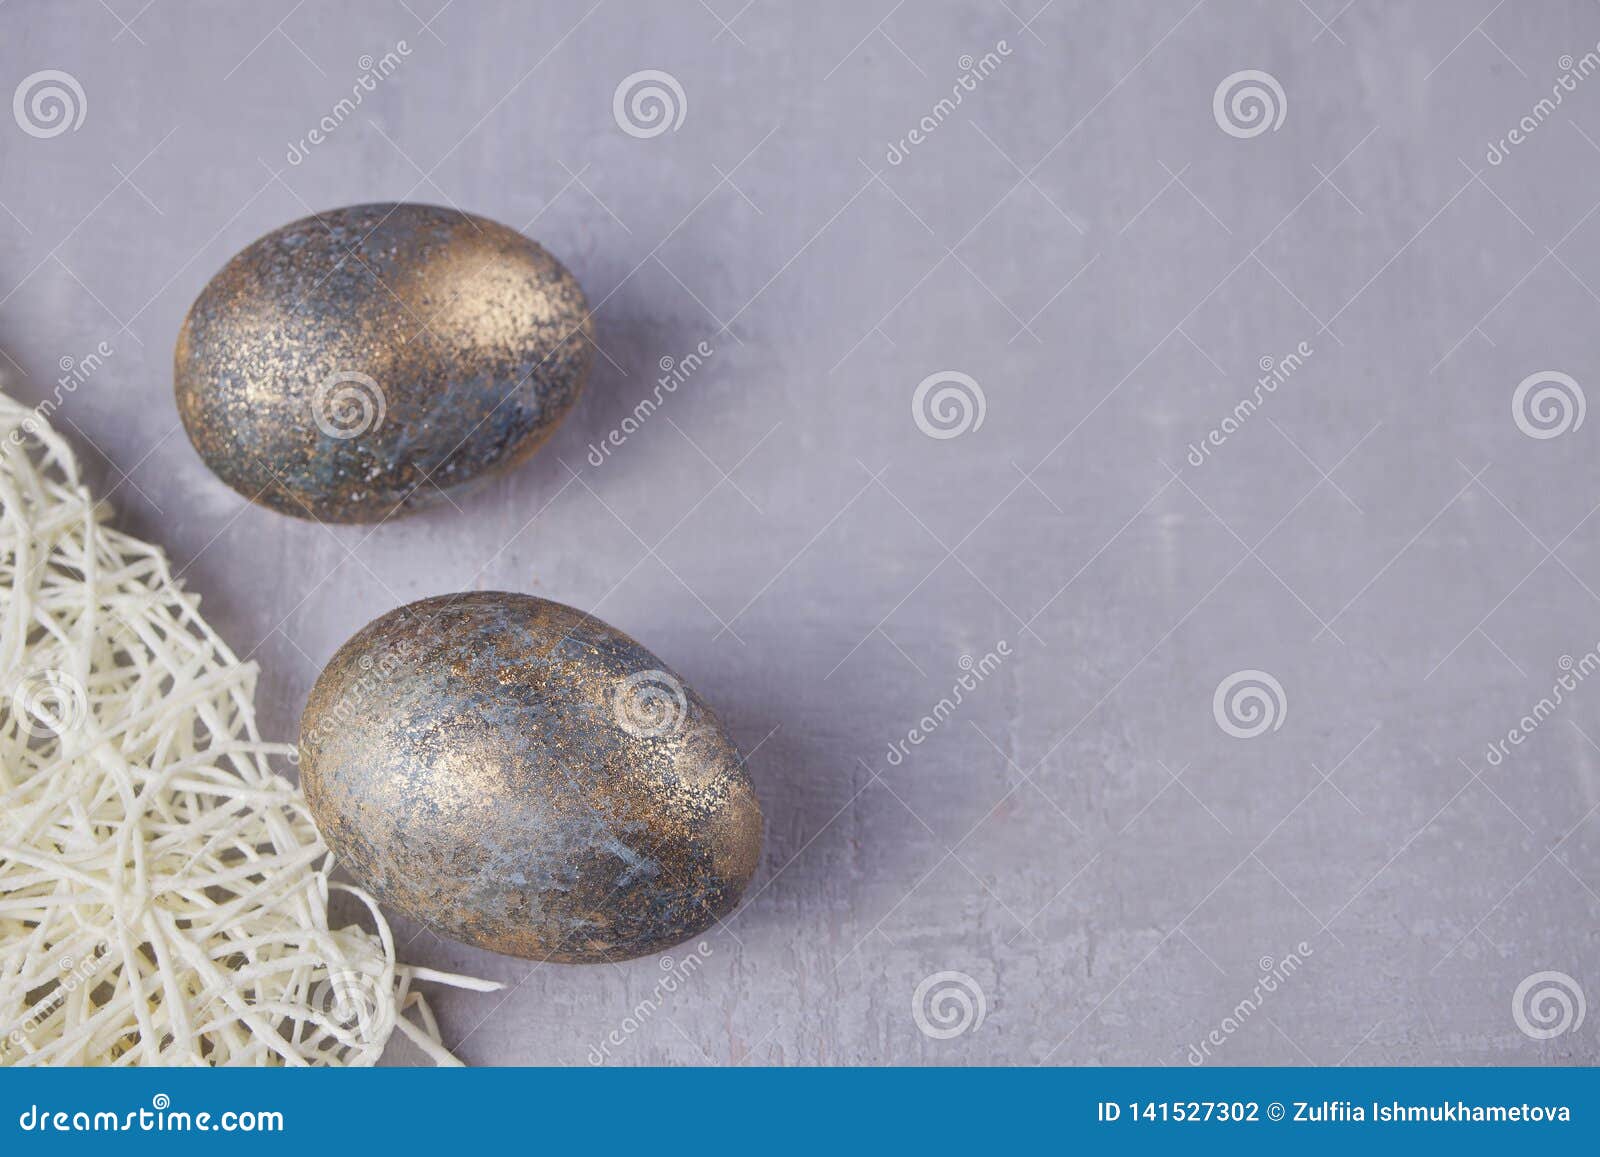 Серебряное яйцо раст. Пасхальные яйца серебро. Серебряные яйца на Пасху. Серые пасхальные яйца. Серебристые пасхальные яйца.